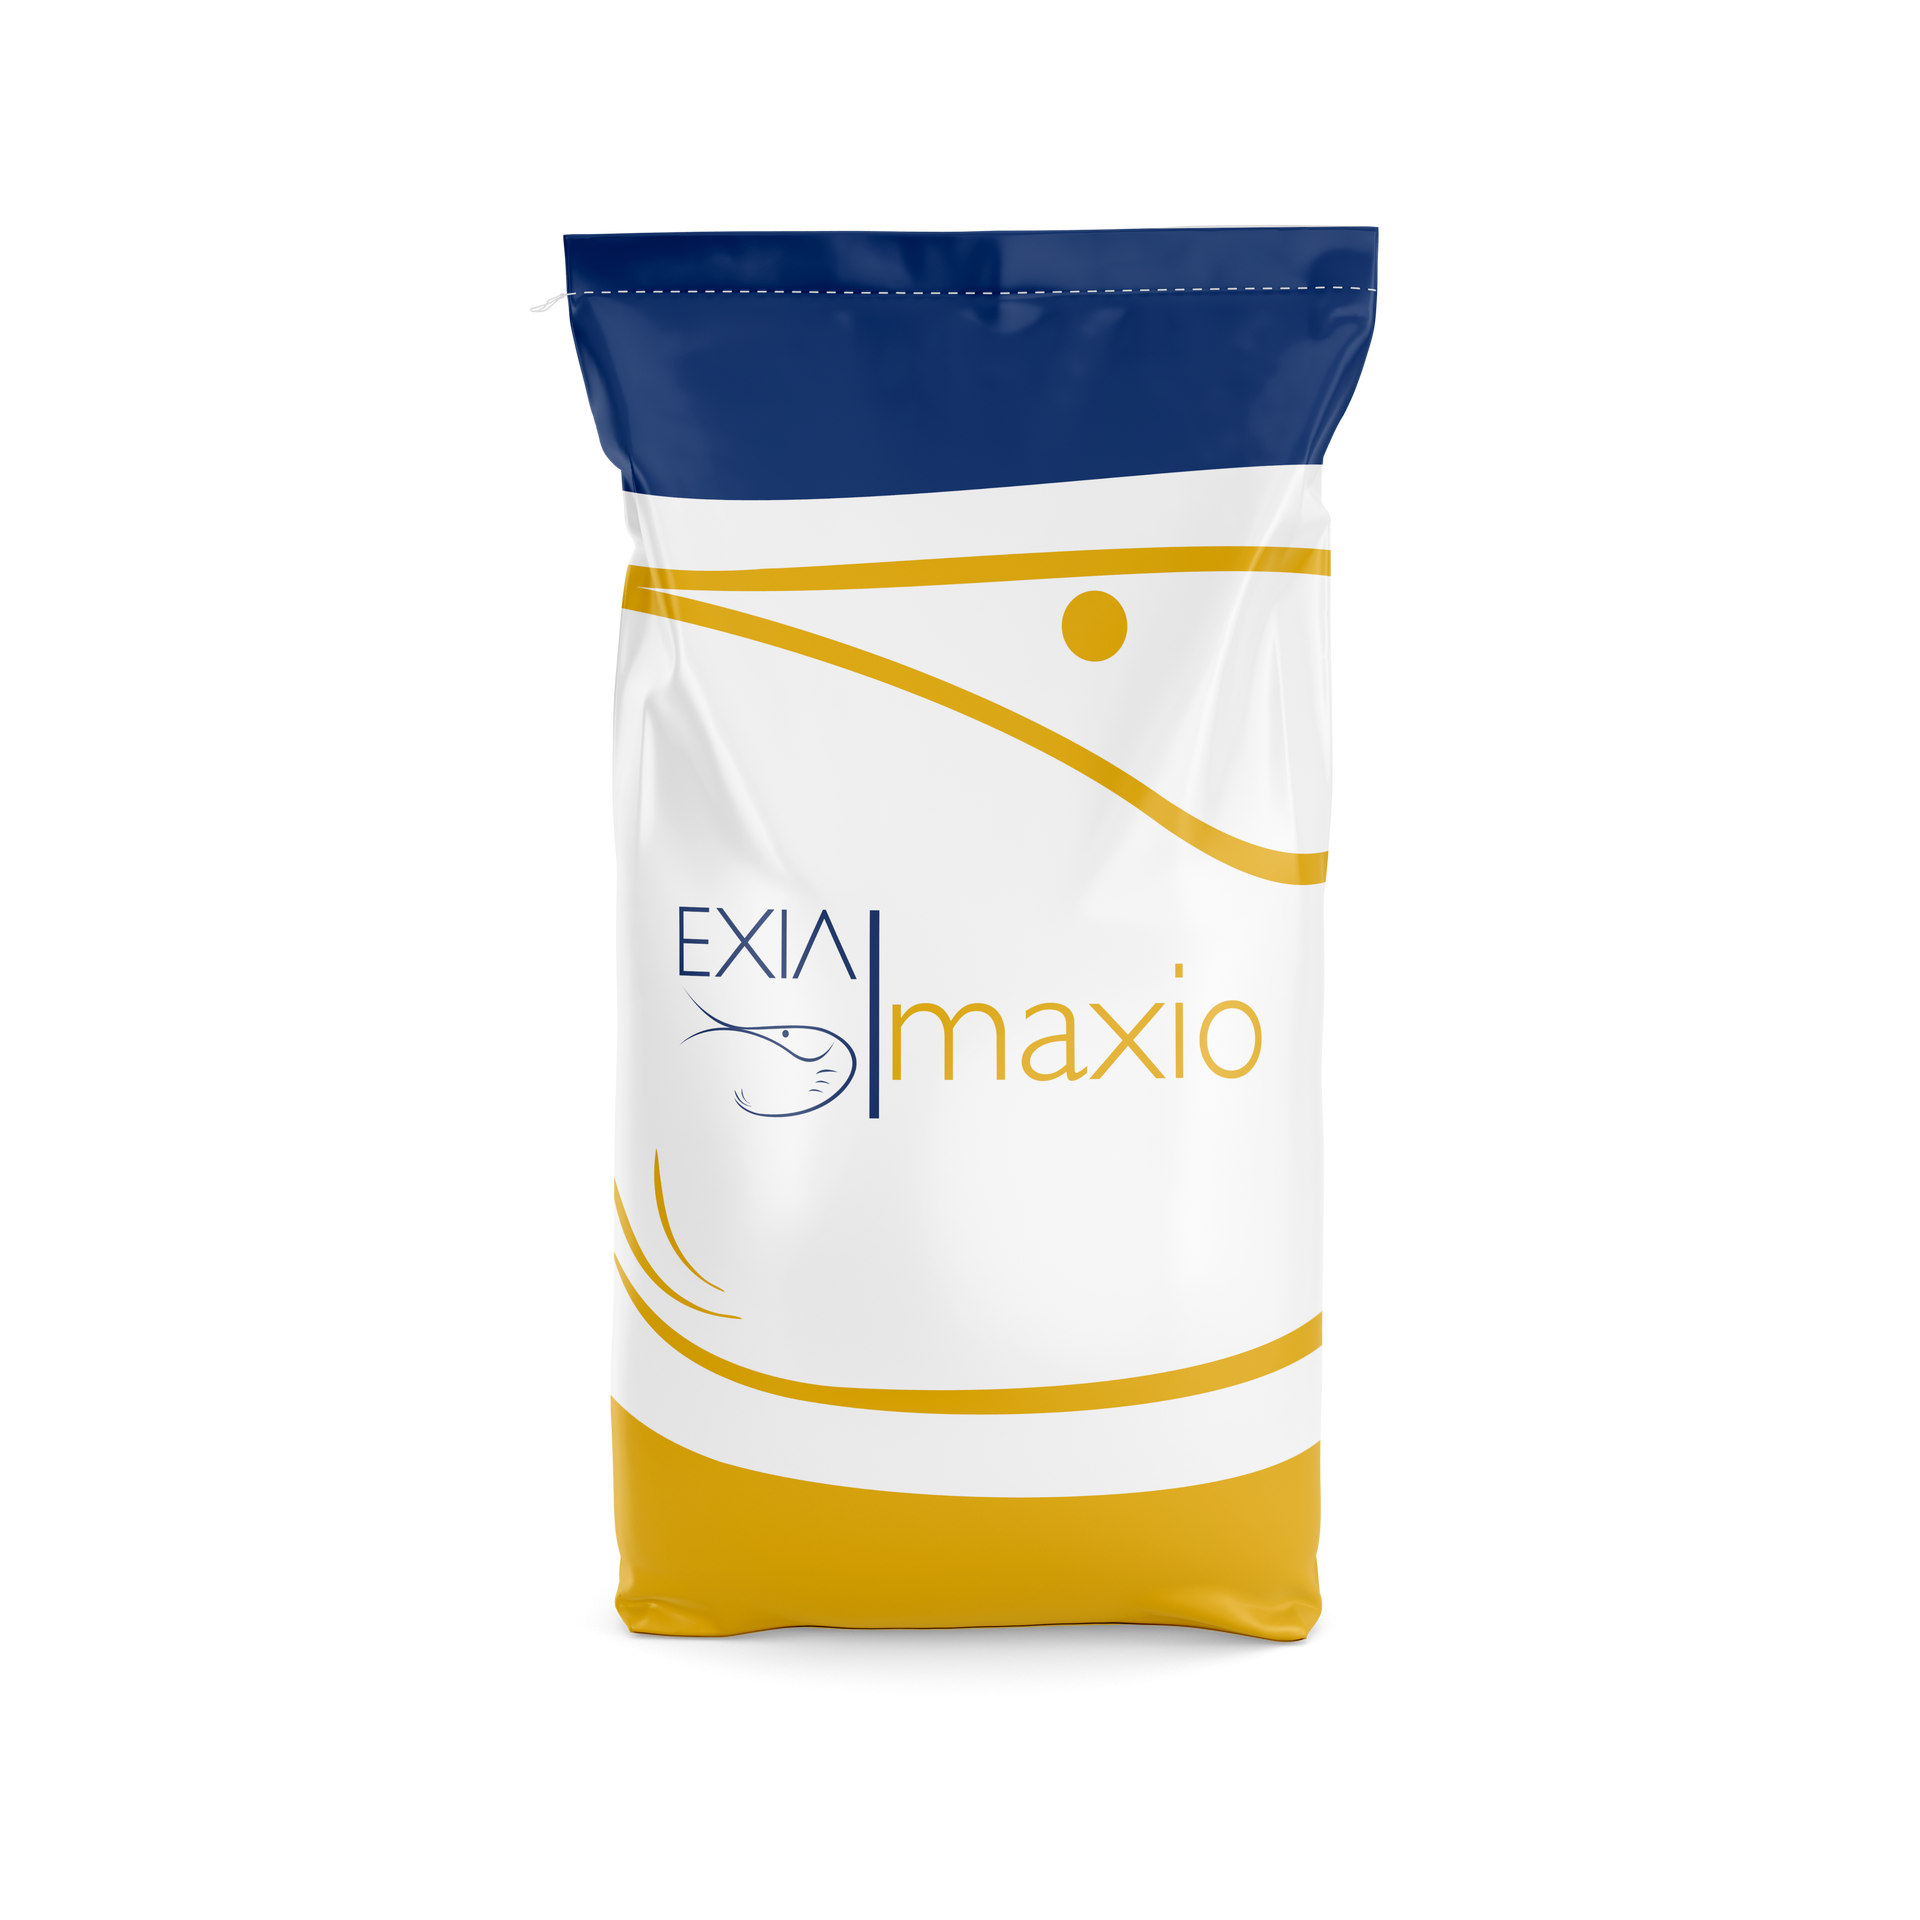 EXIA Maxio top performance feed for shrimp